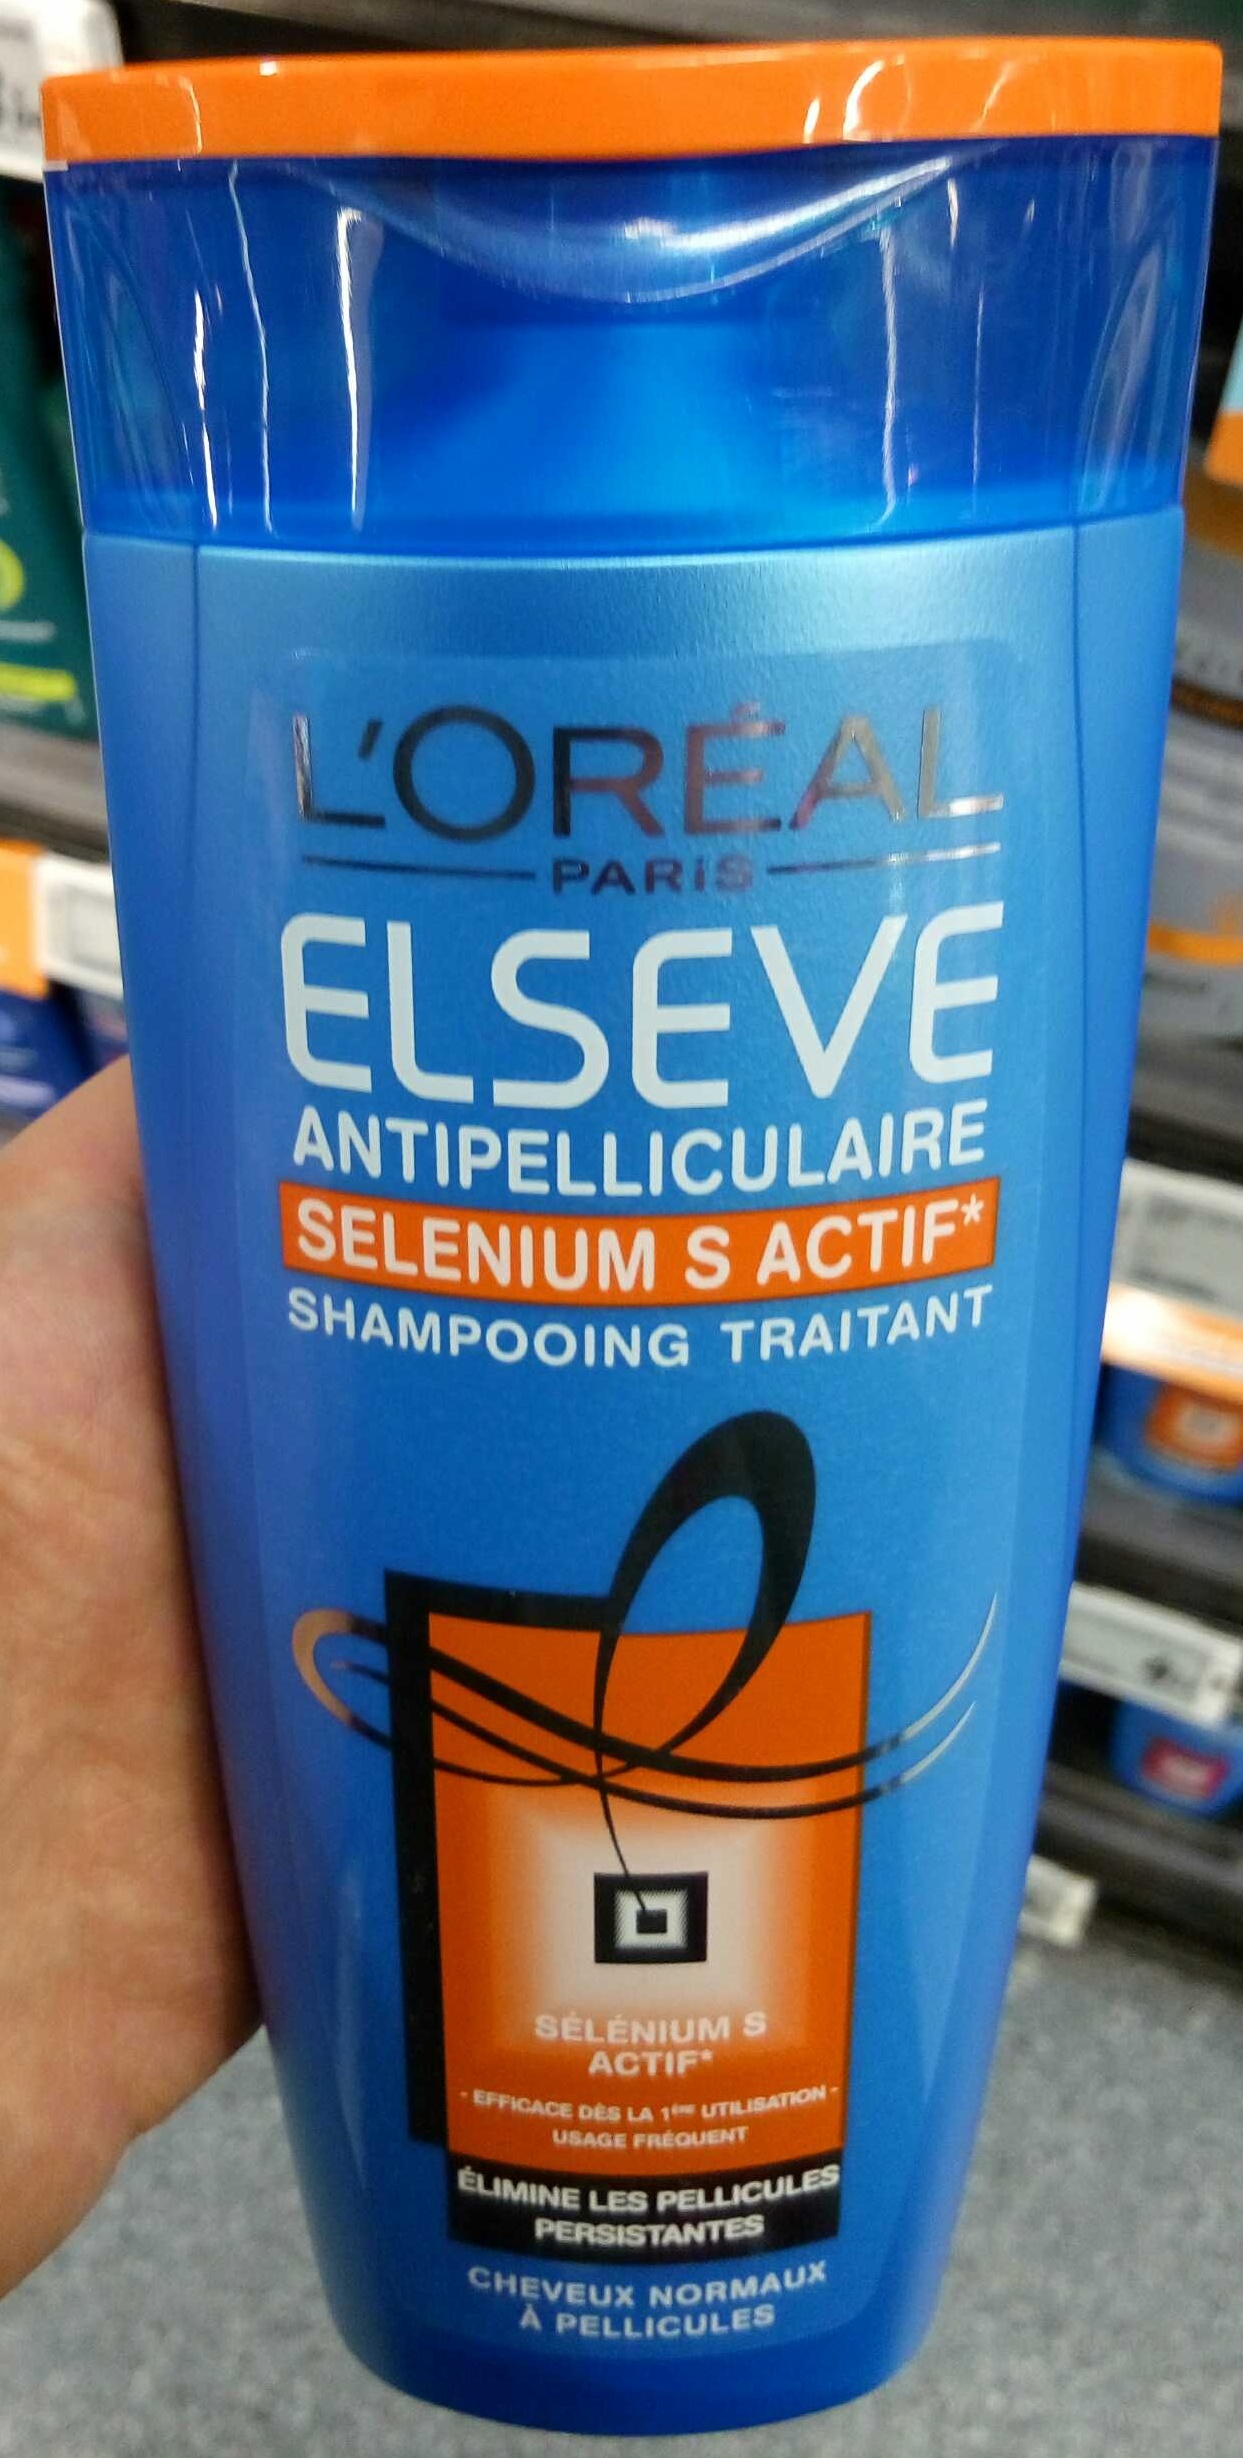 Elseve Antipelliculaire Selenium S actif shampooing traitant - Product - fr